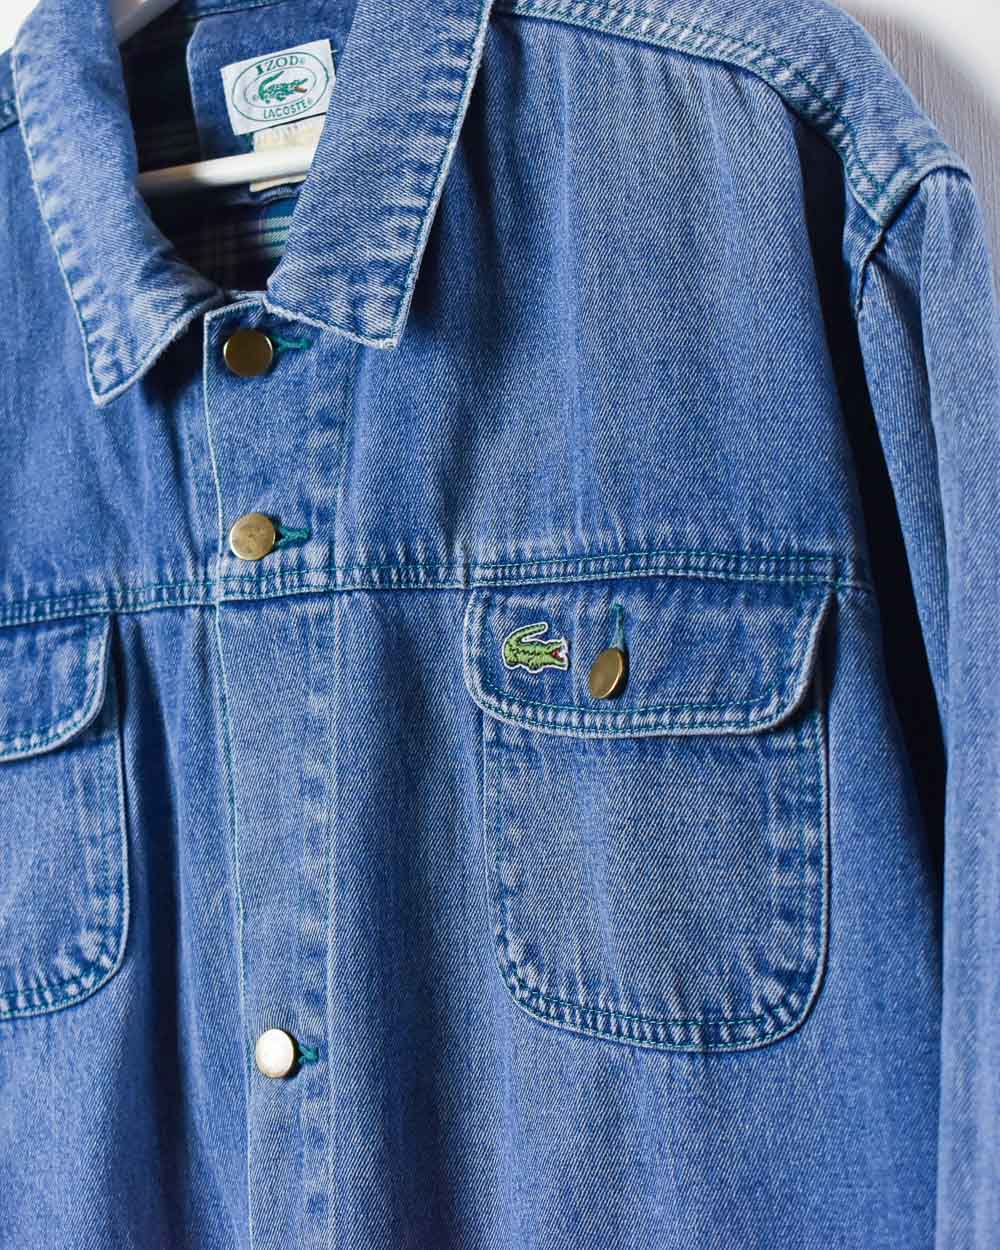 Blue Izod Lacoste 80s Denim Jacket - Medium